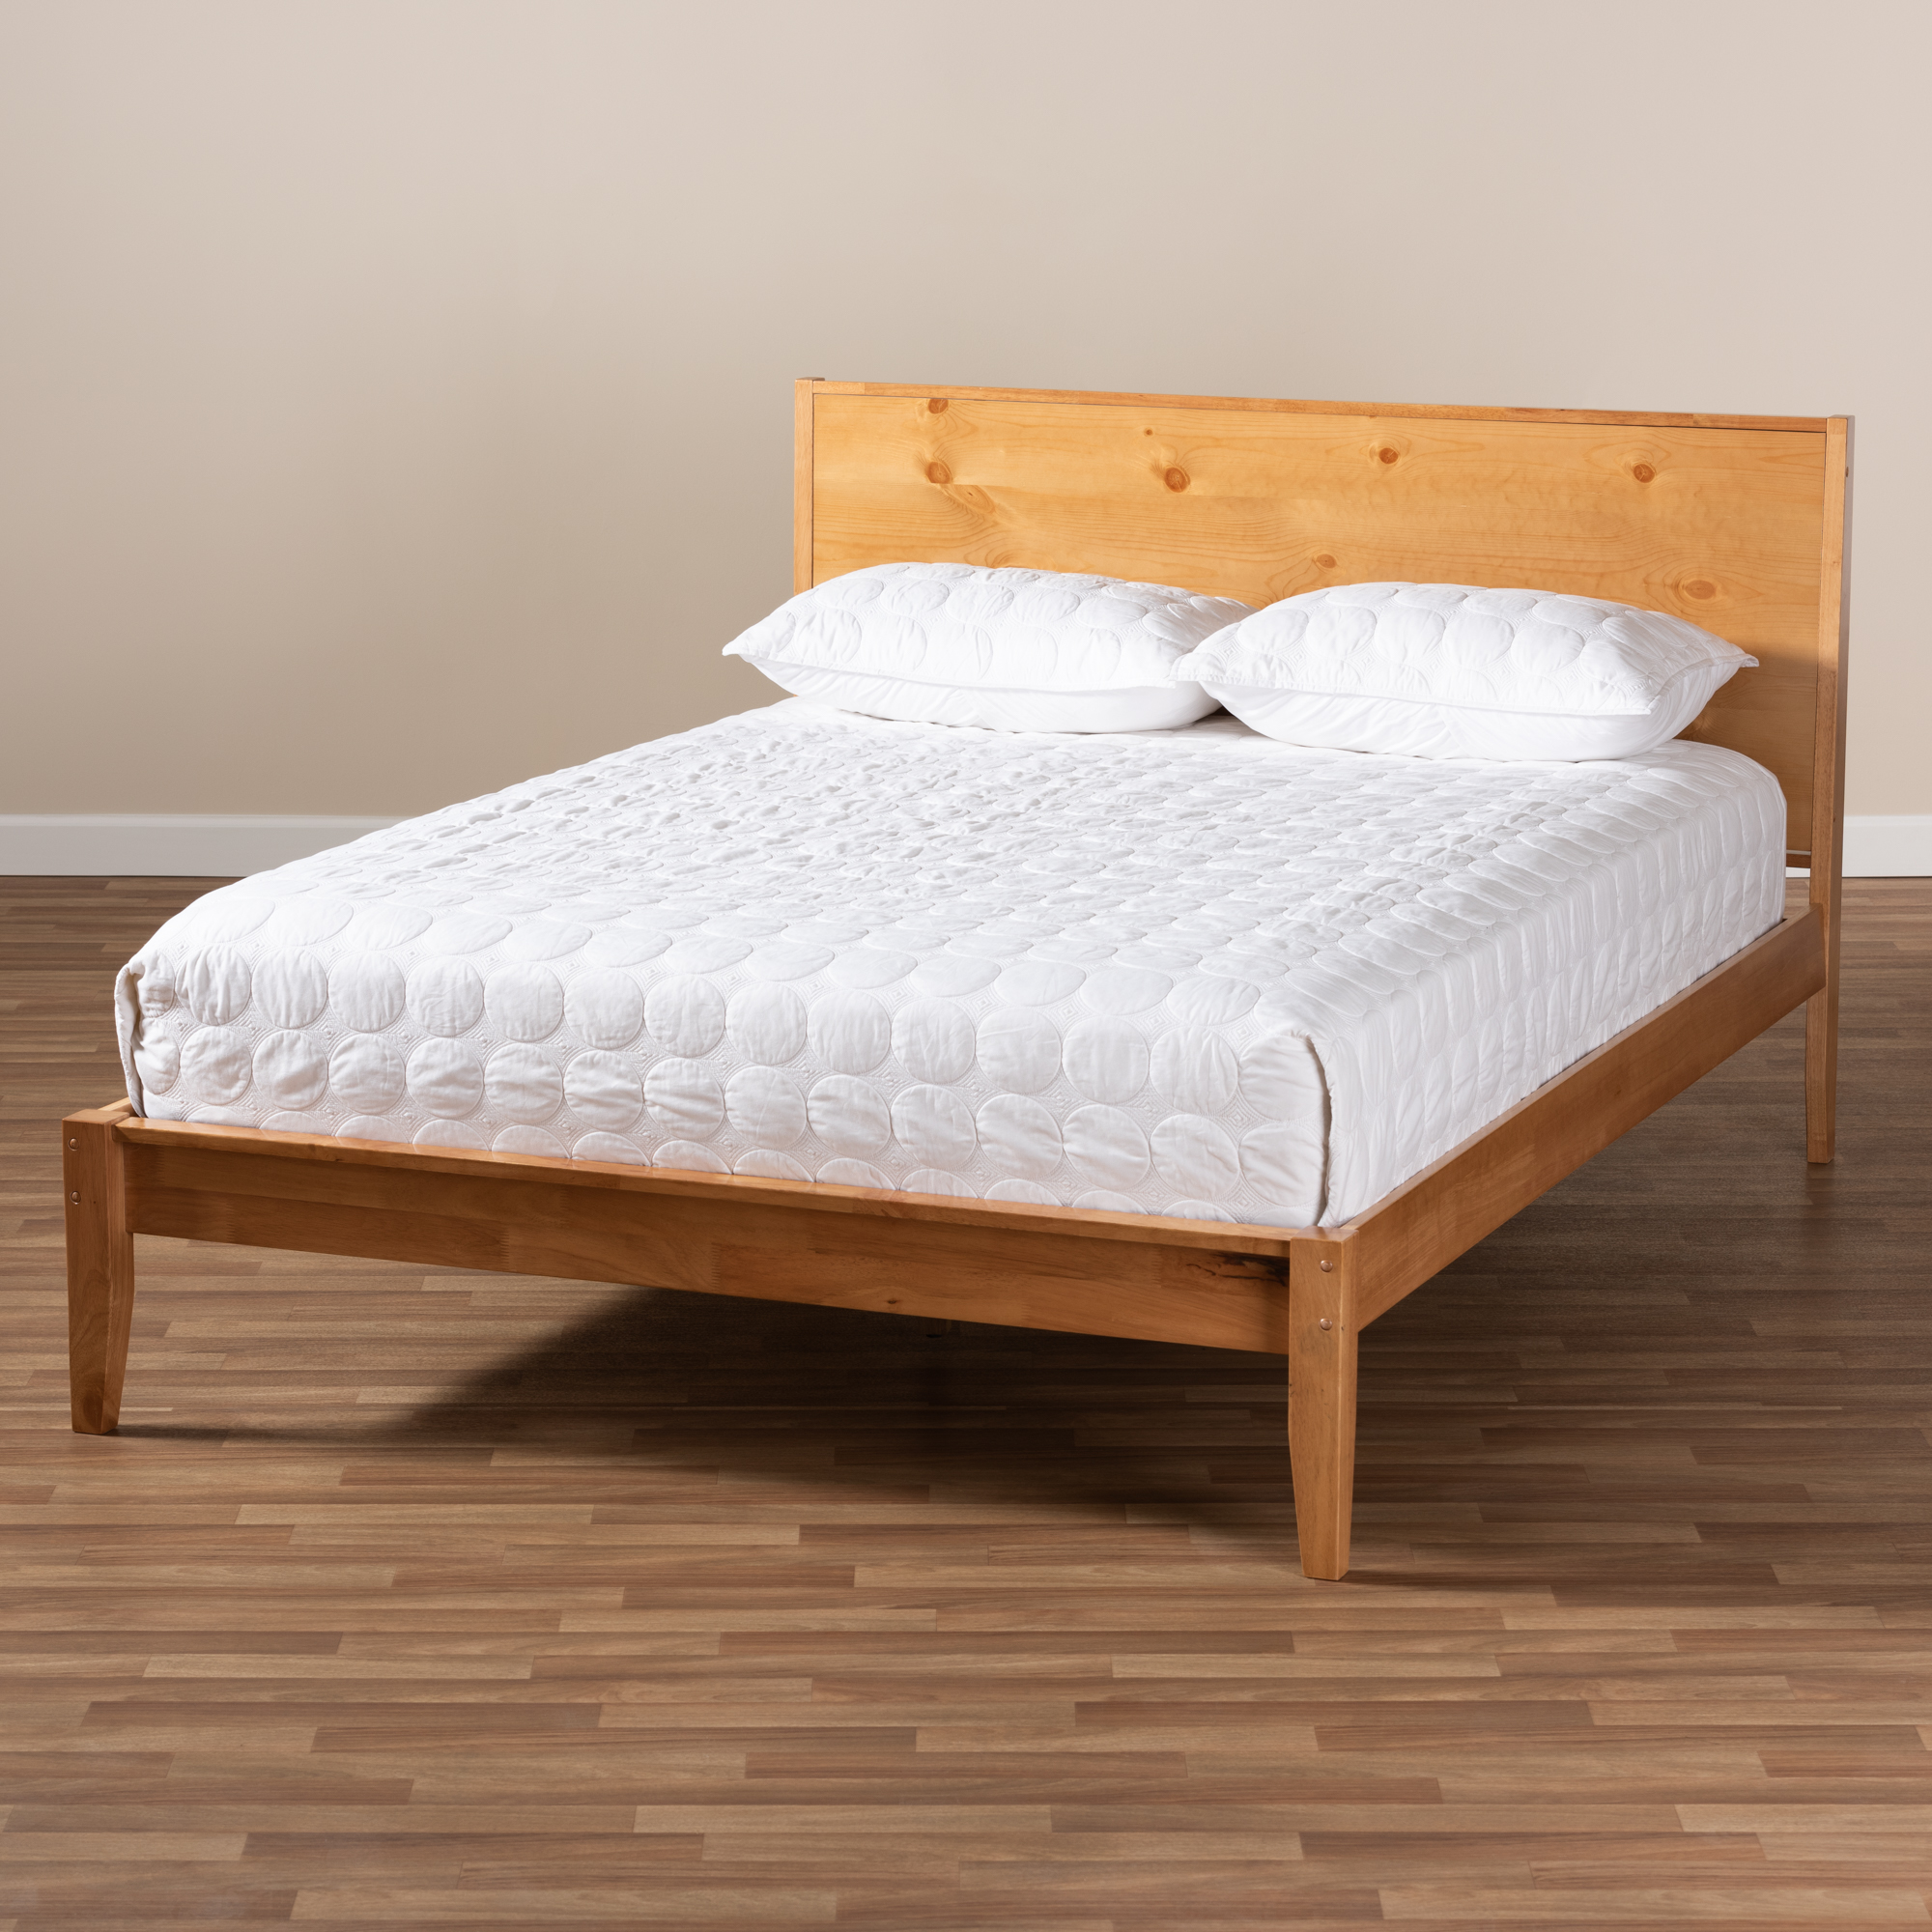 Baxton Studio Marana Modern And Rustic, Full Size Pine Wood Platform Bed Frame